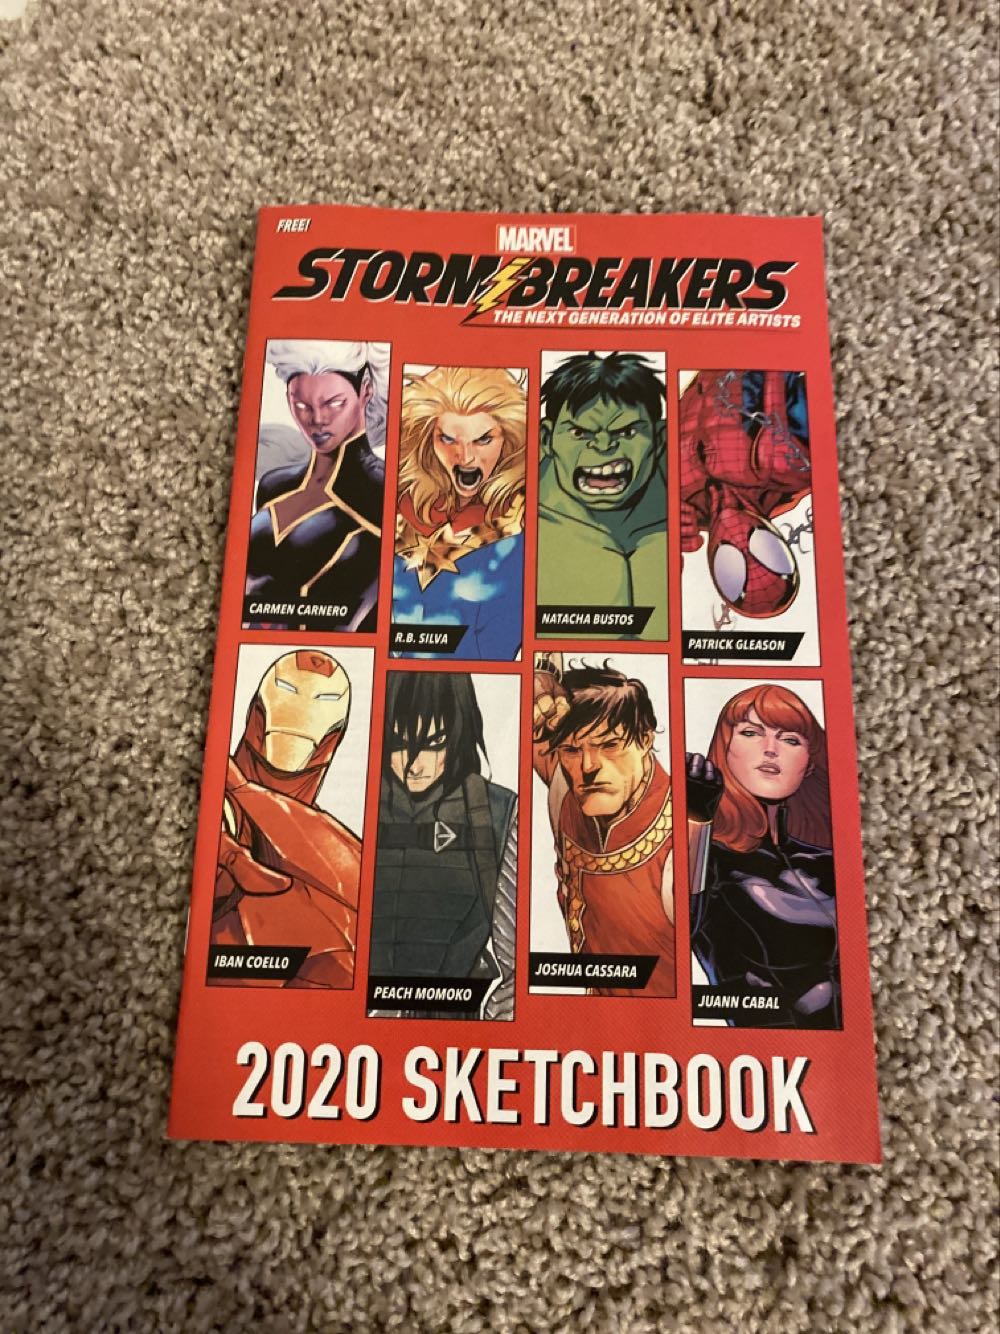 Stormbreakers 2020 Sketchbook #1 - Marvel (1 - Jan 2021) comic book collectible [Barcode 75960608479196511] - Main Image 1